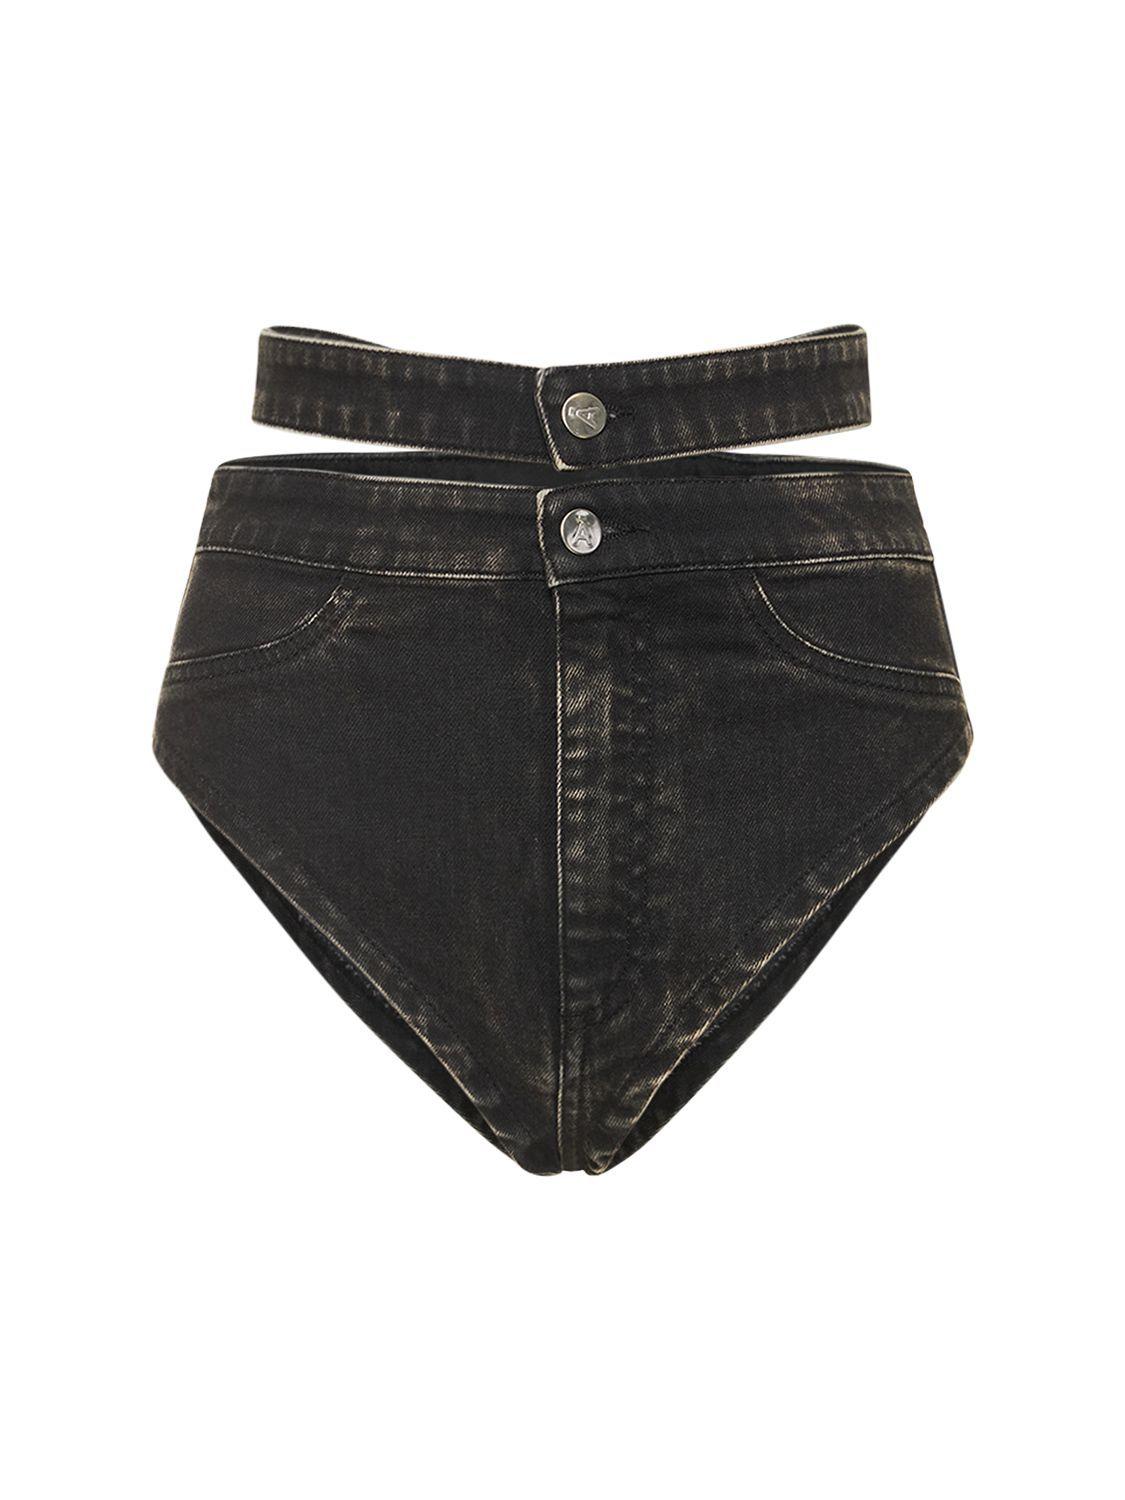 Chanel 2014 Stripe Details Denim Hot Pants Shorts